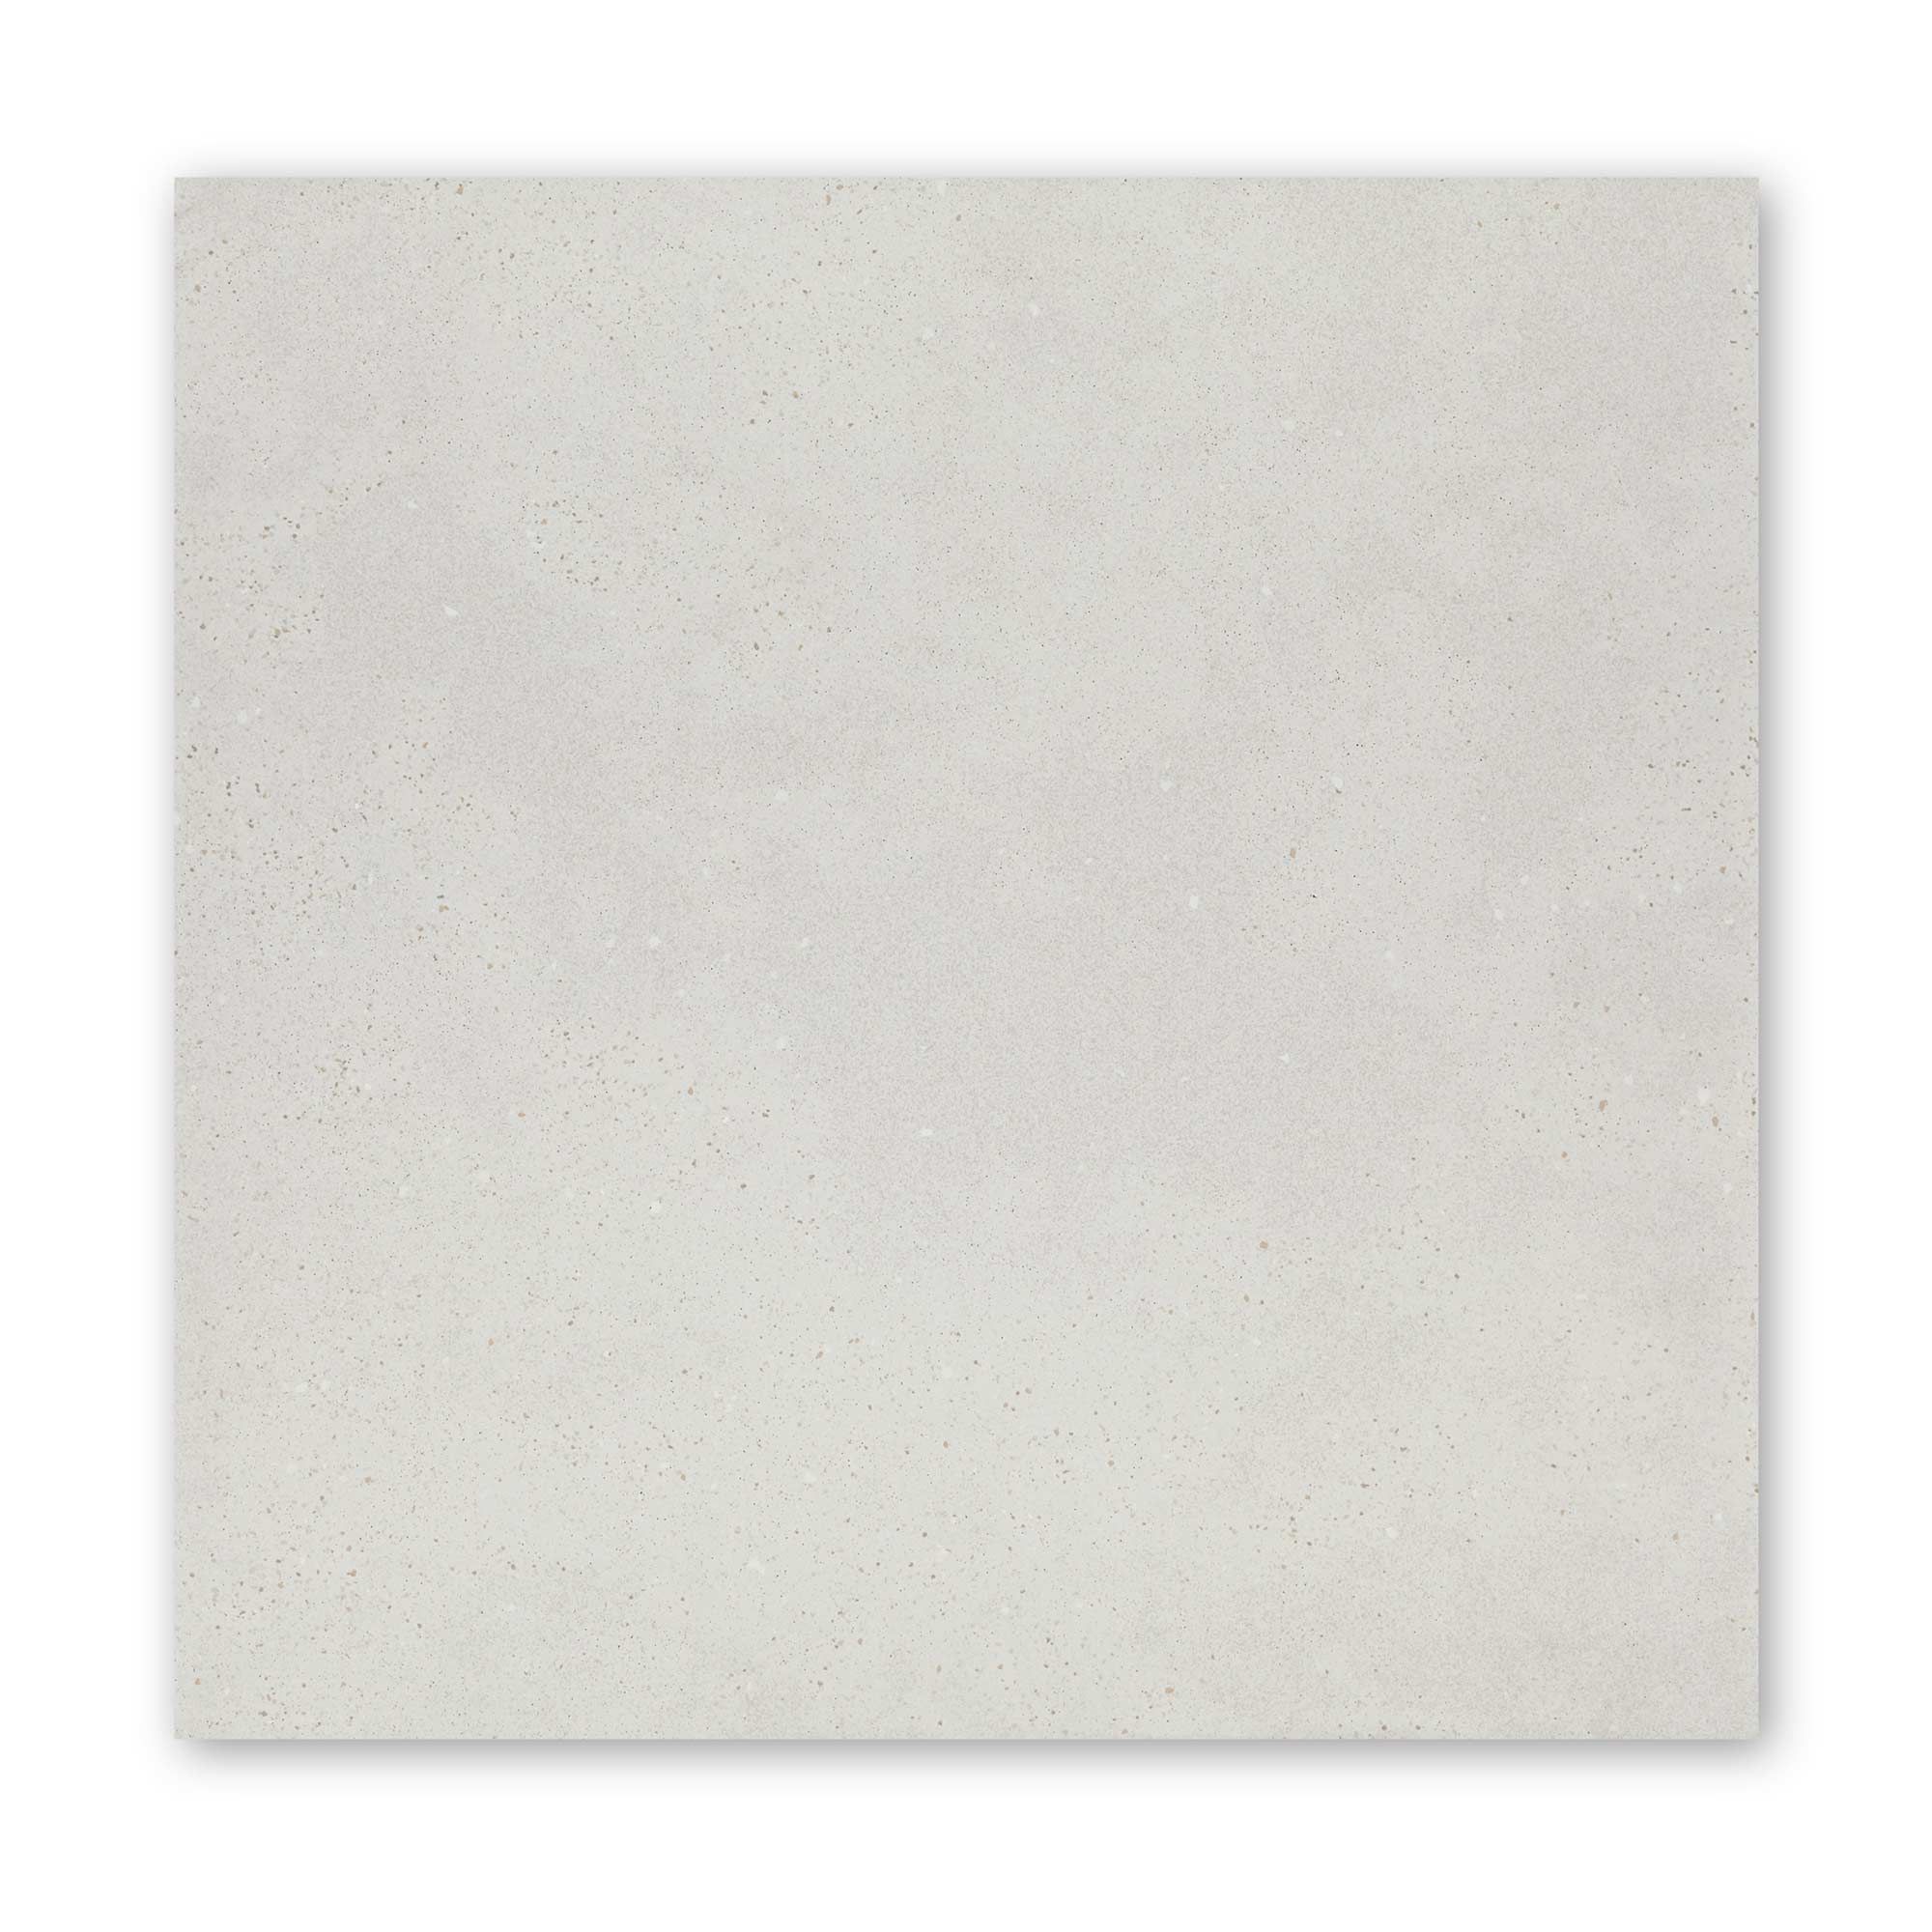 Umbrian White 60 x 60